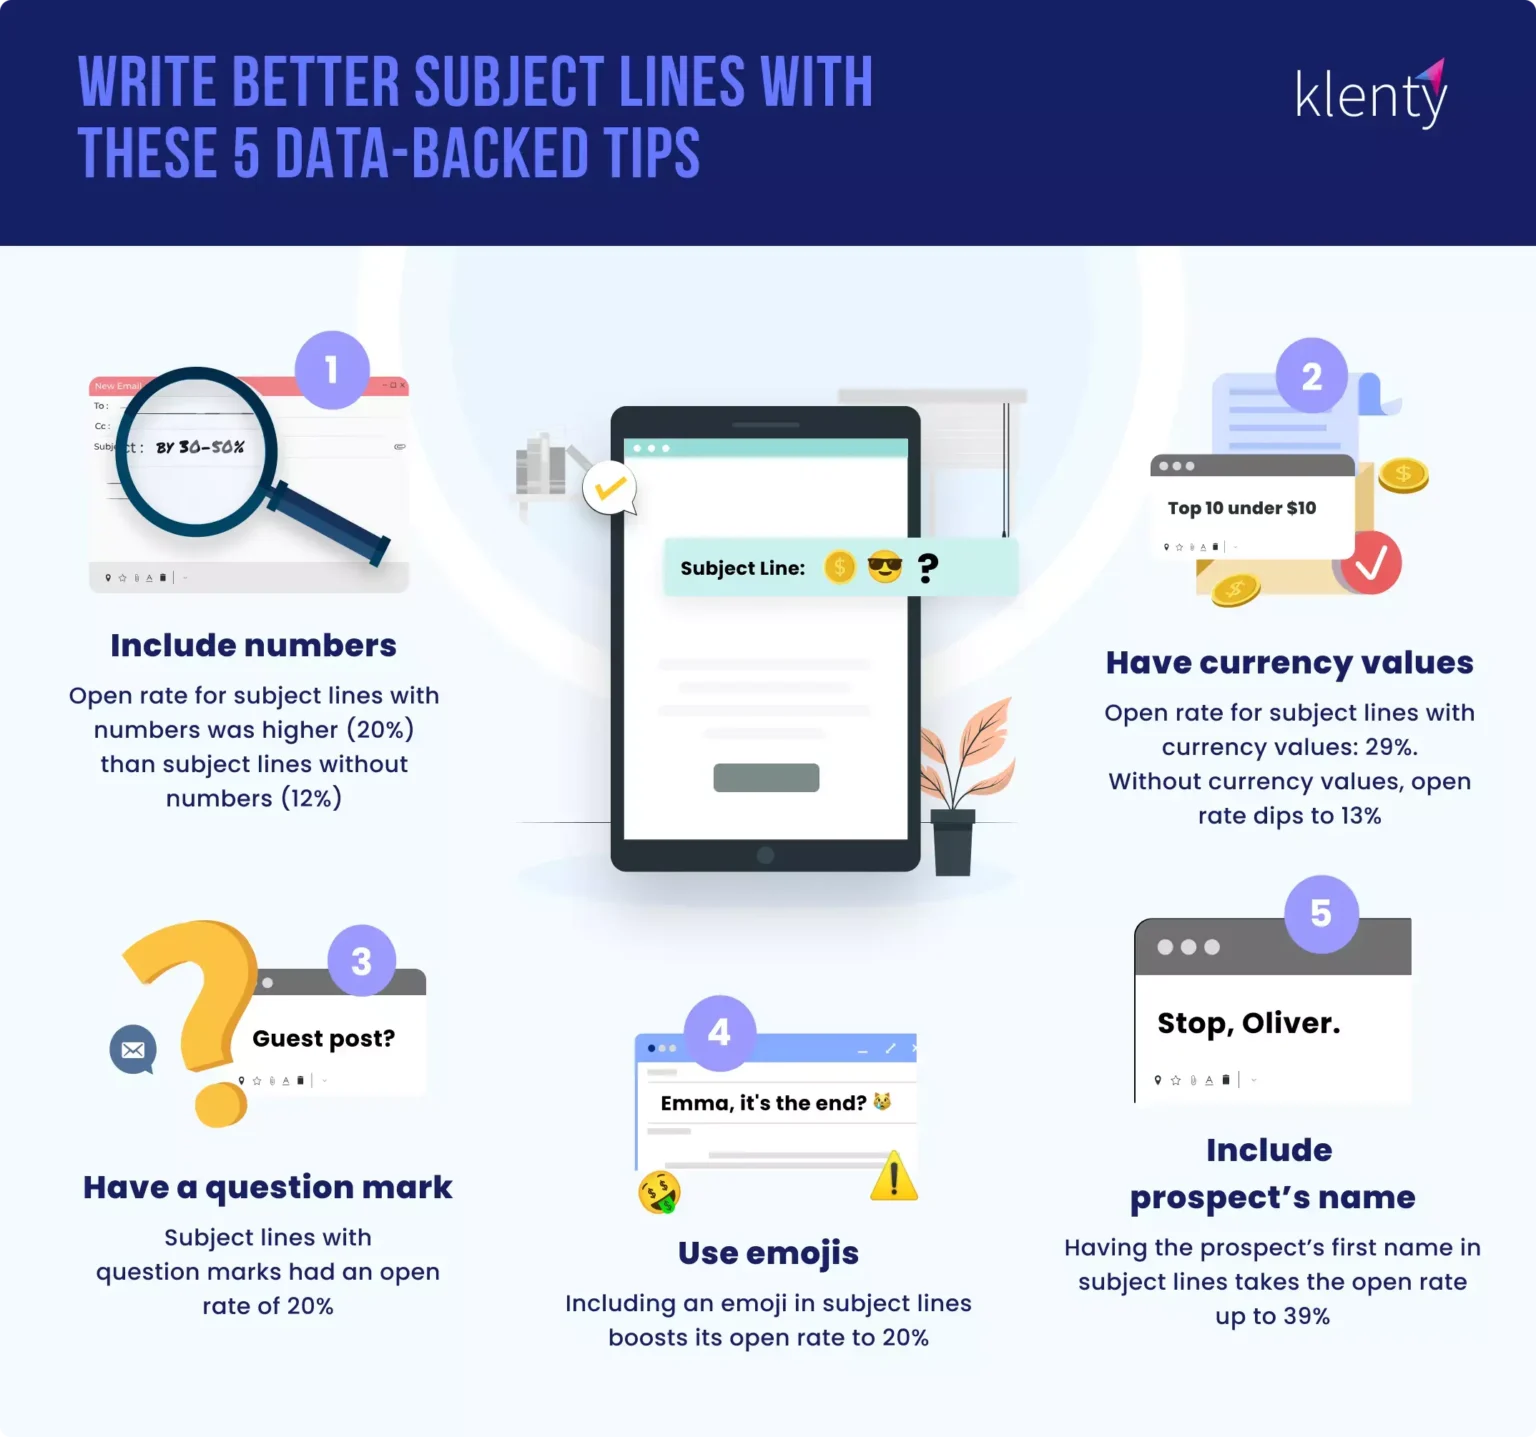 Email Subject Lines Best Practices (Source: klenty.com)